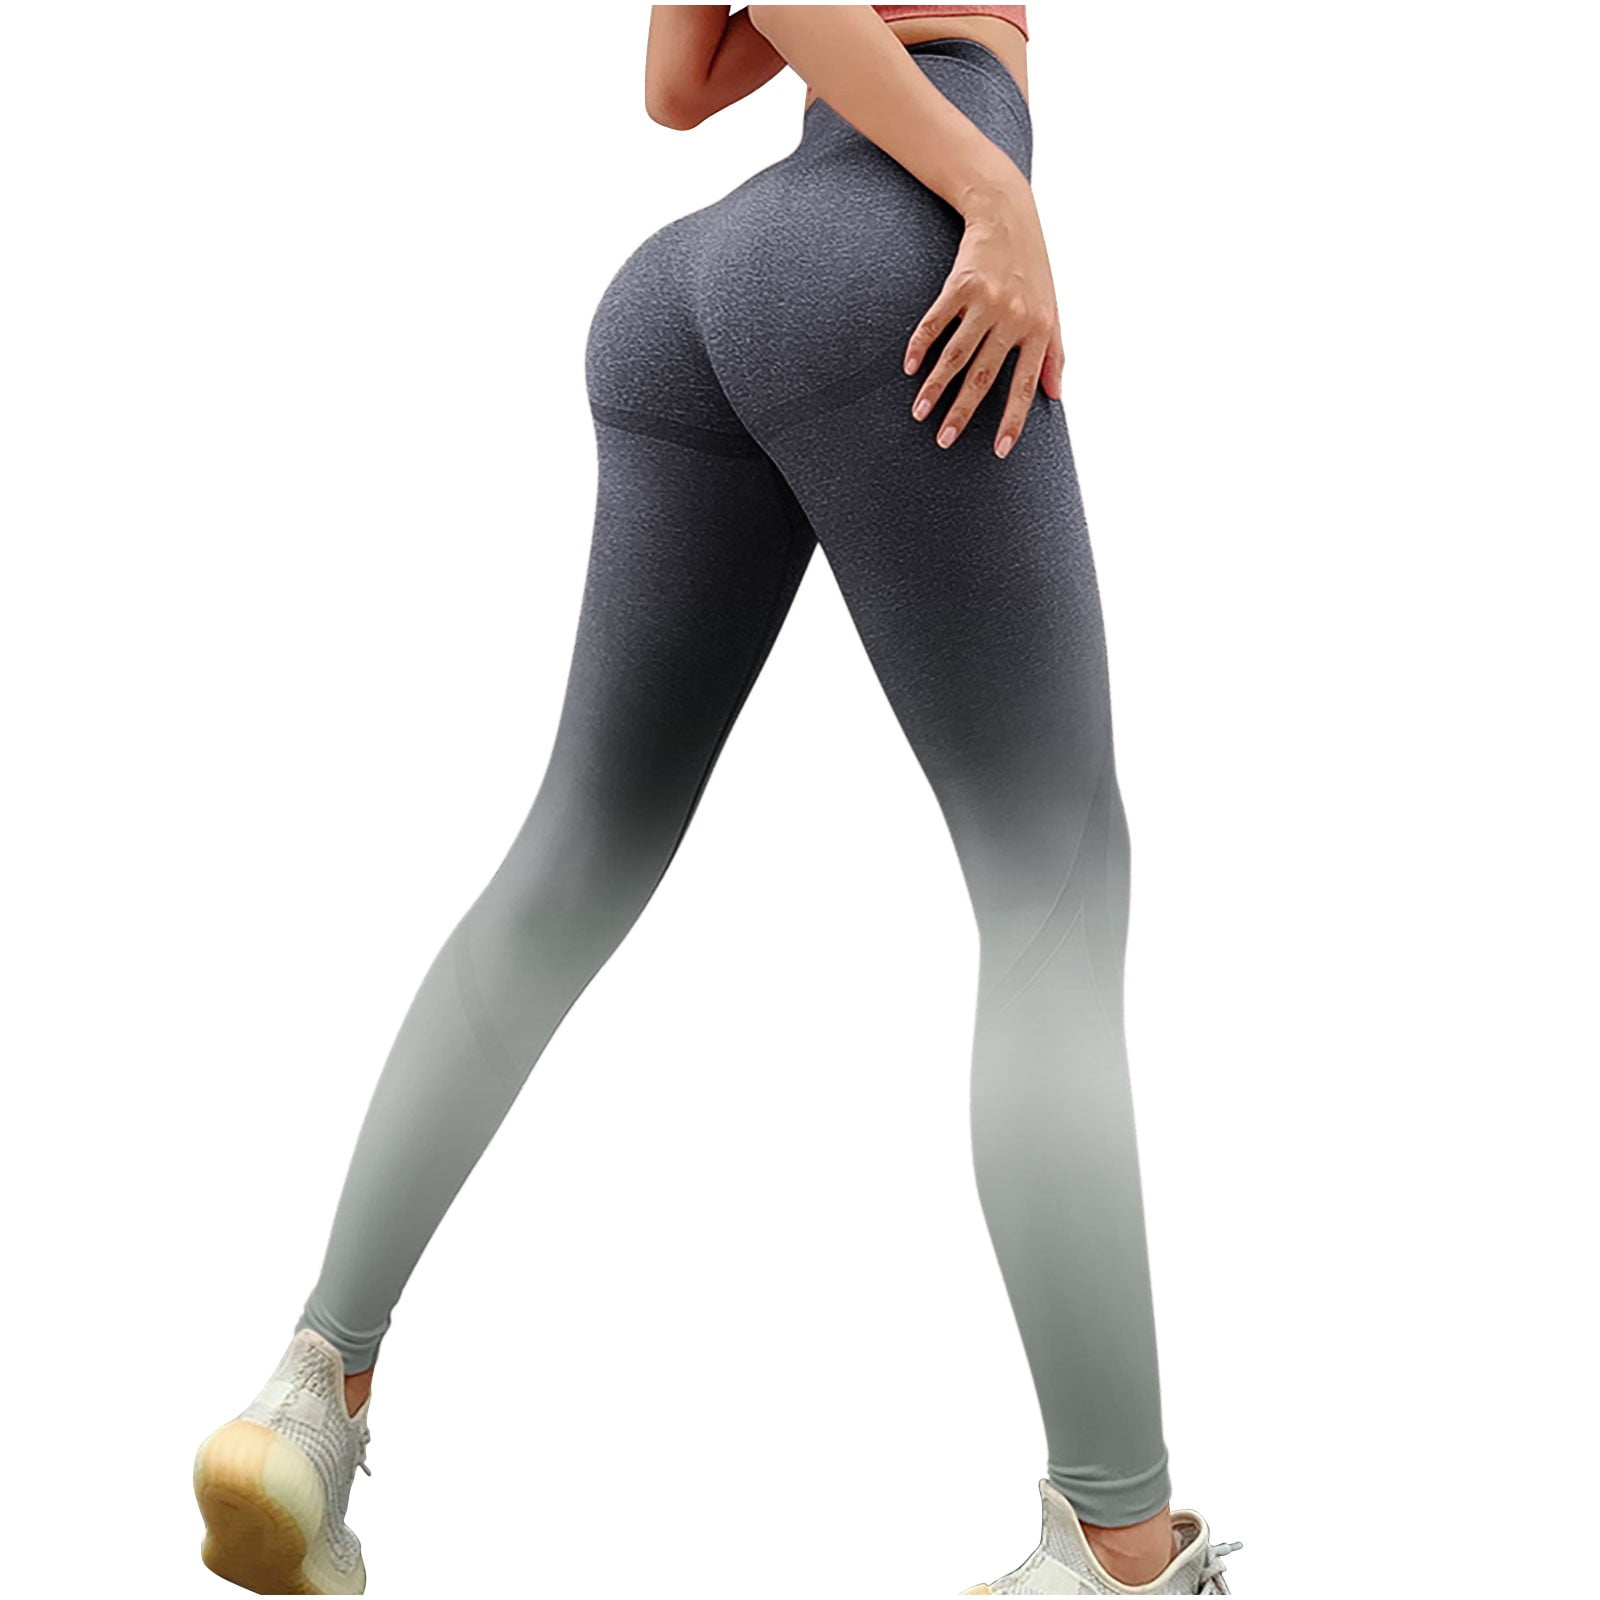 High Waisted Tummy Control Legging for Women Medium Compression Seamless  Shapewear for Women 